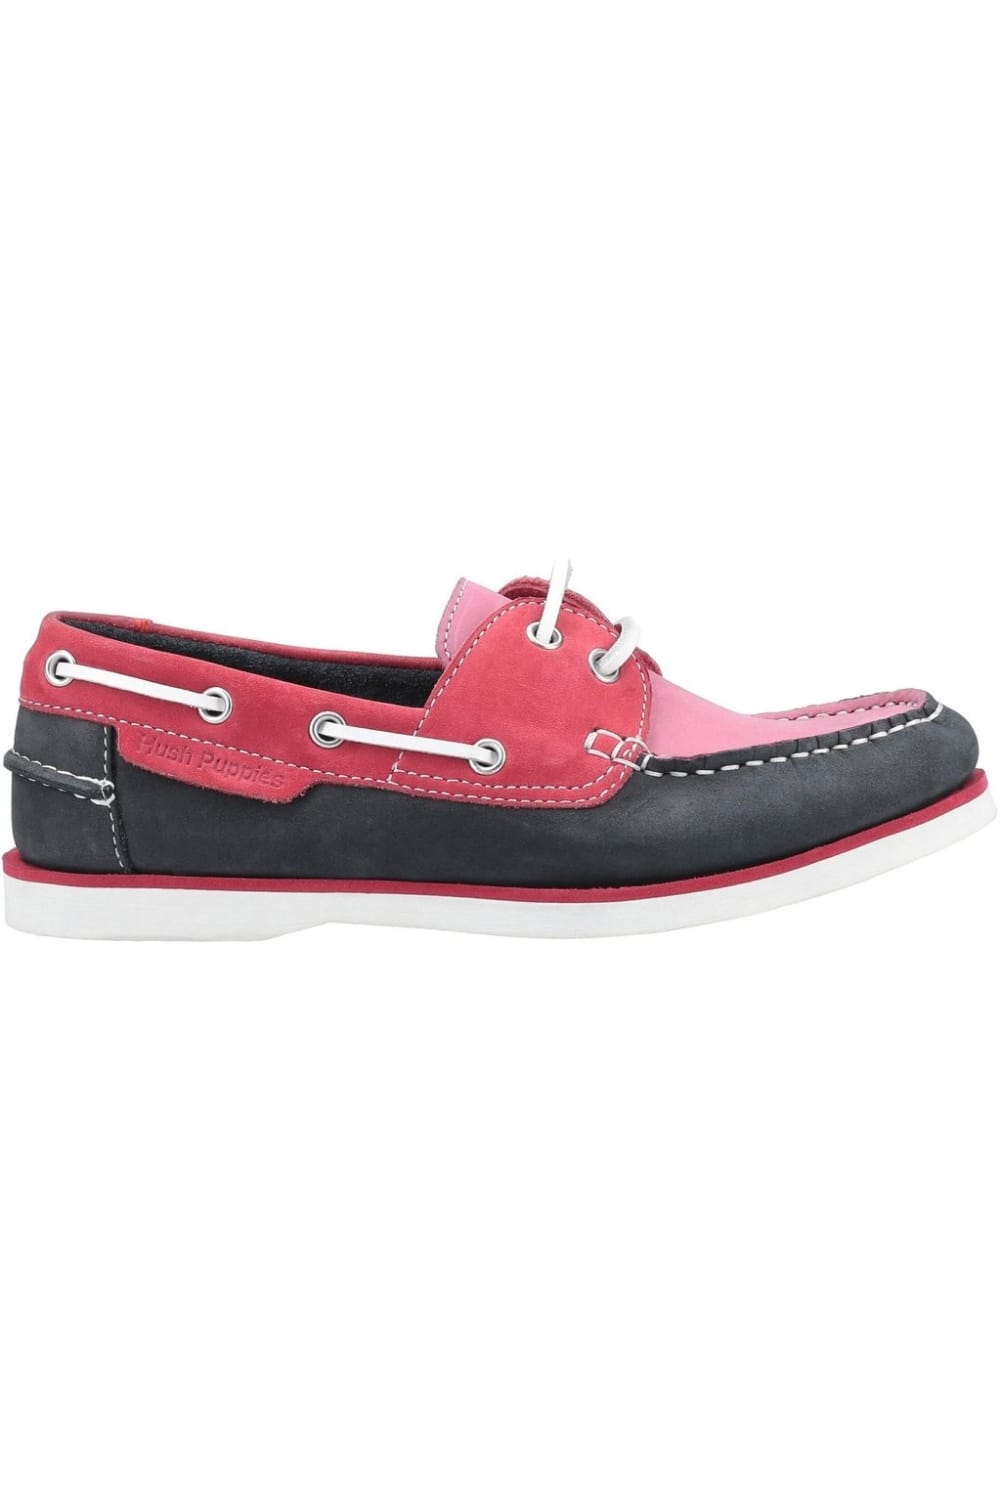 Womens/Ladies Hattie Leather Boat Shoe (Pink/Navy)